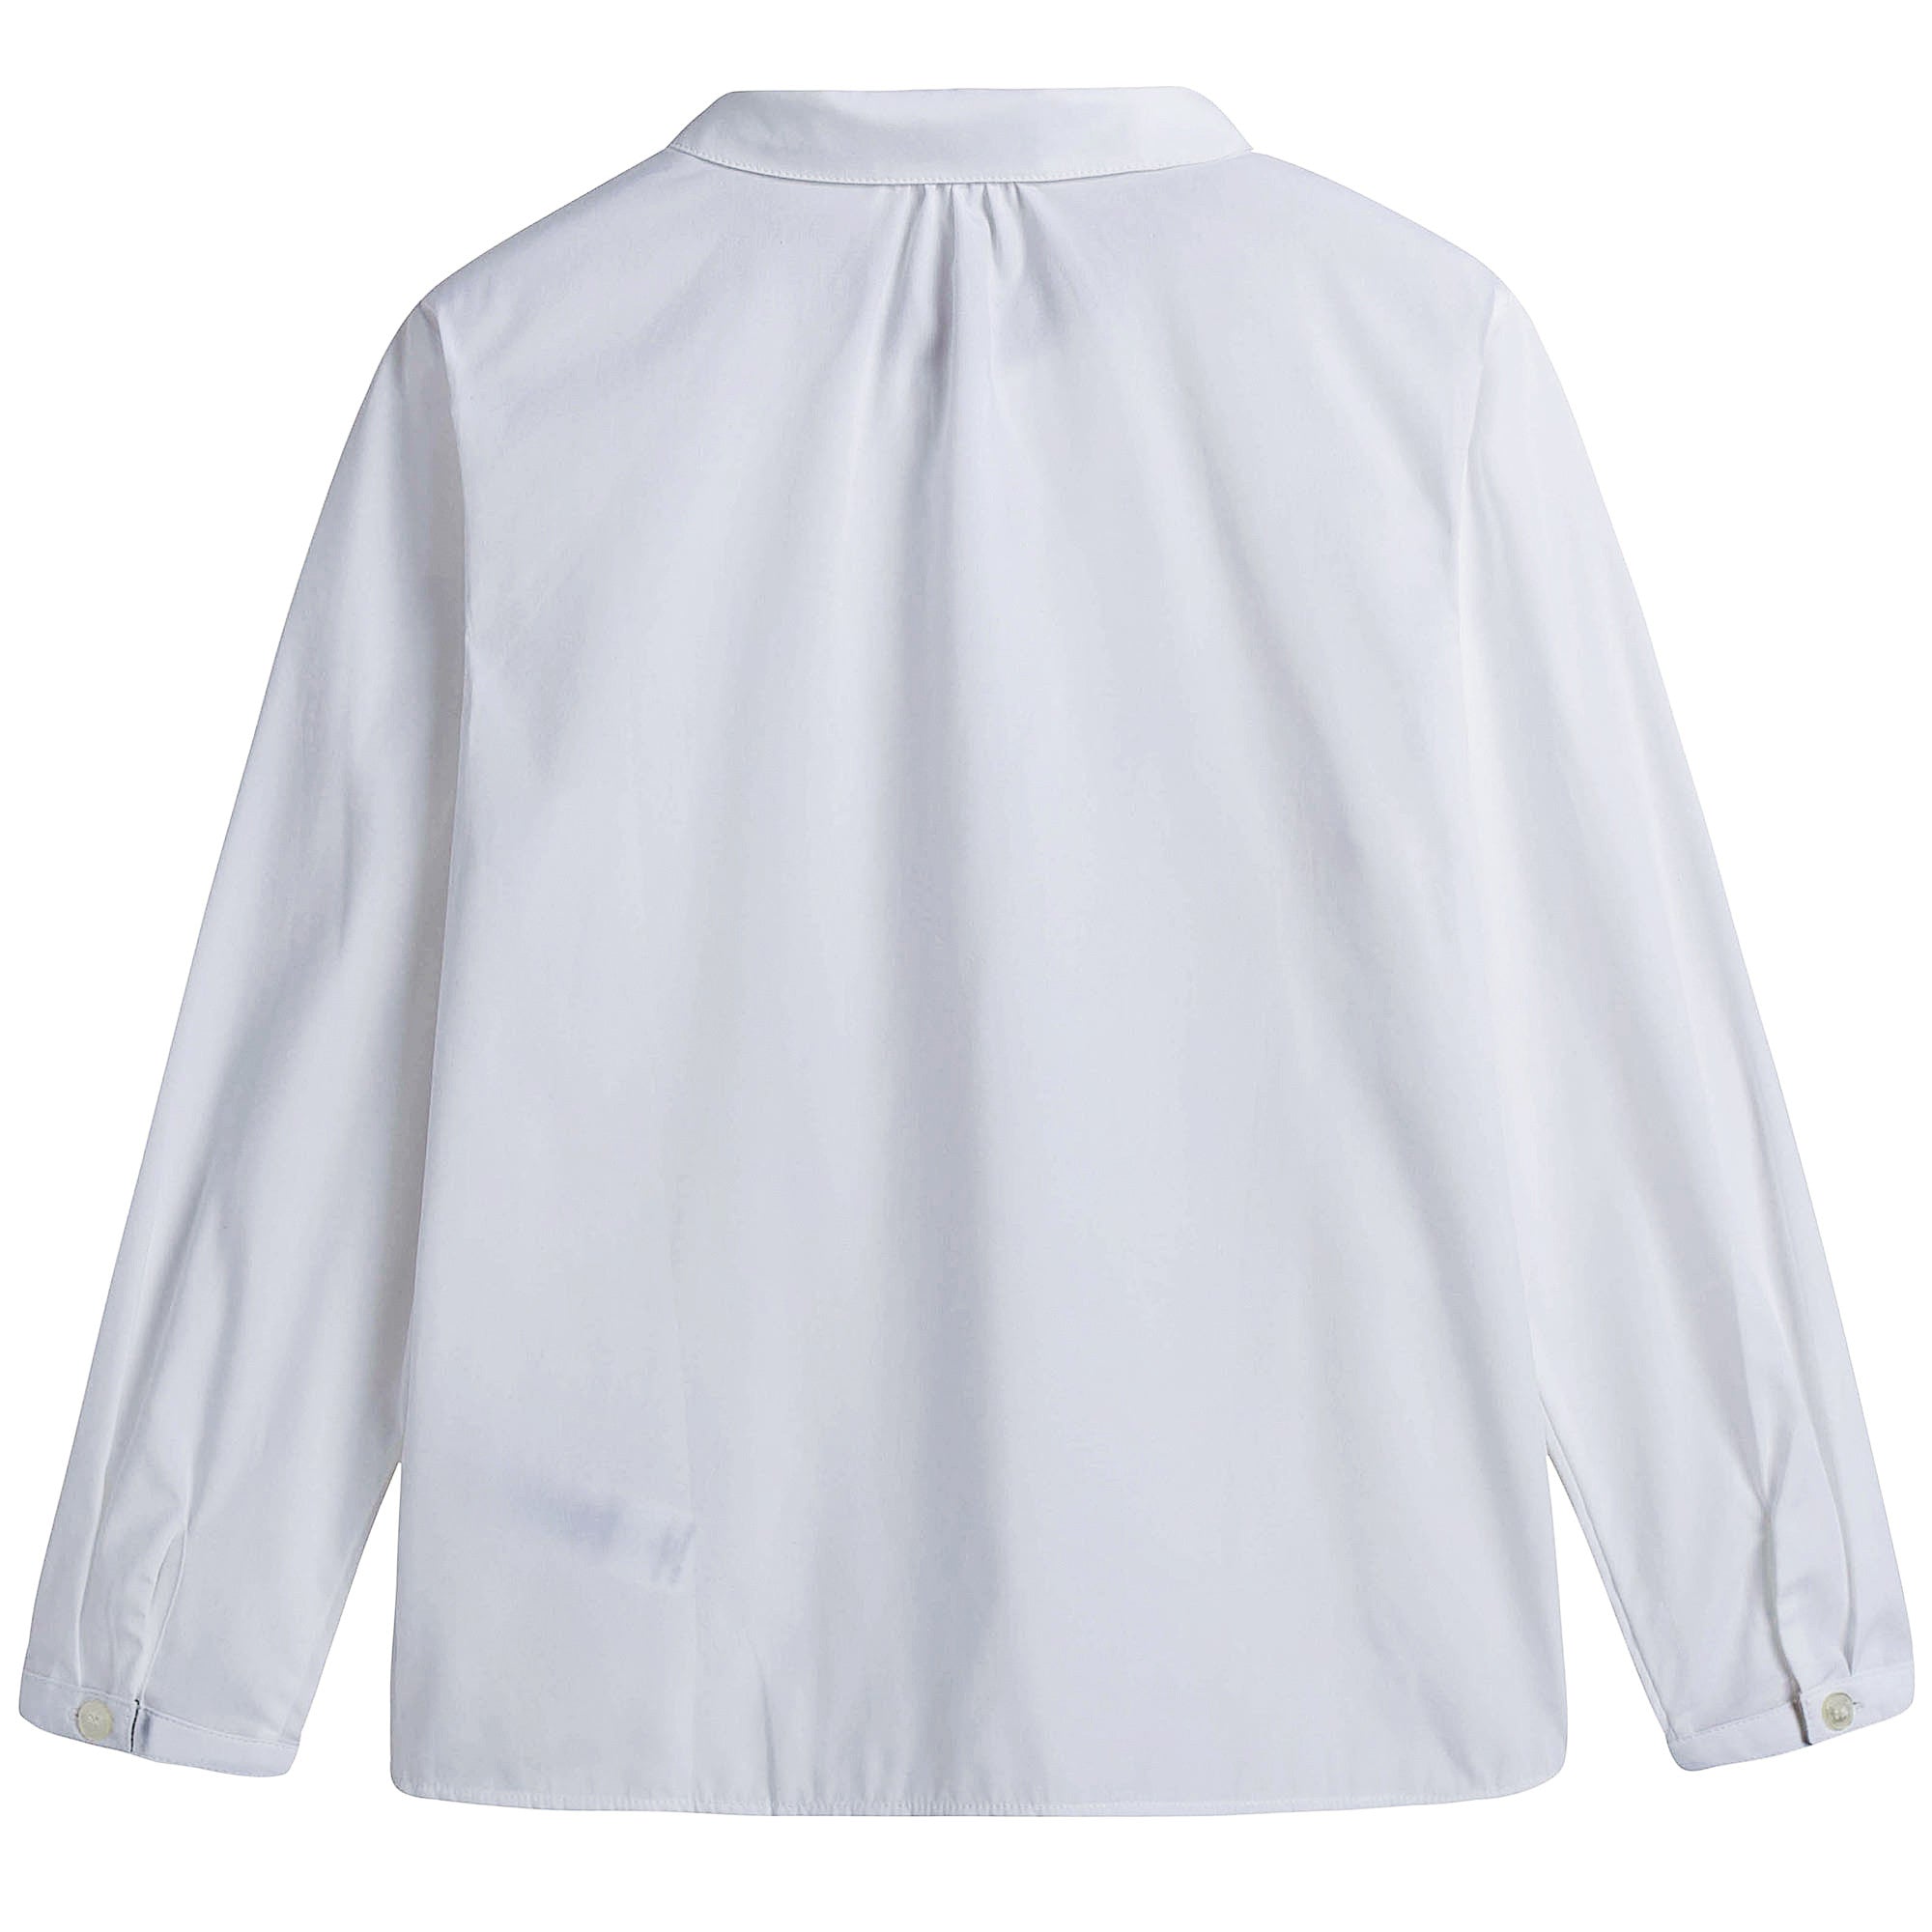 Girls White Cotton Blouse - CÉMAROSE | Children's Fashion Store - 2